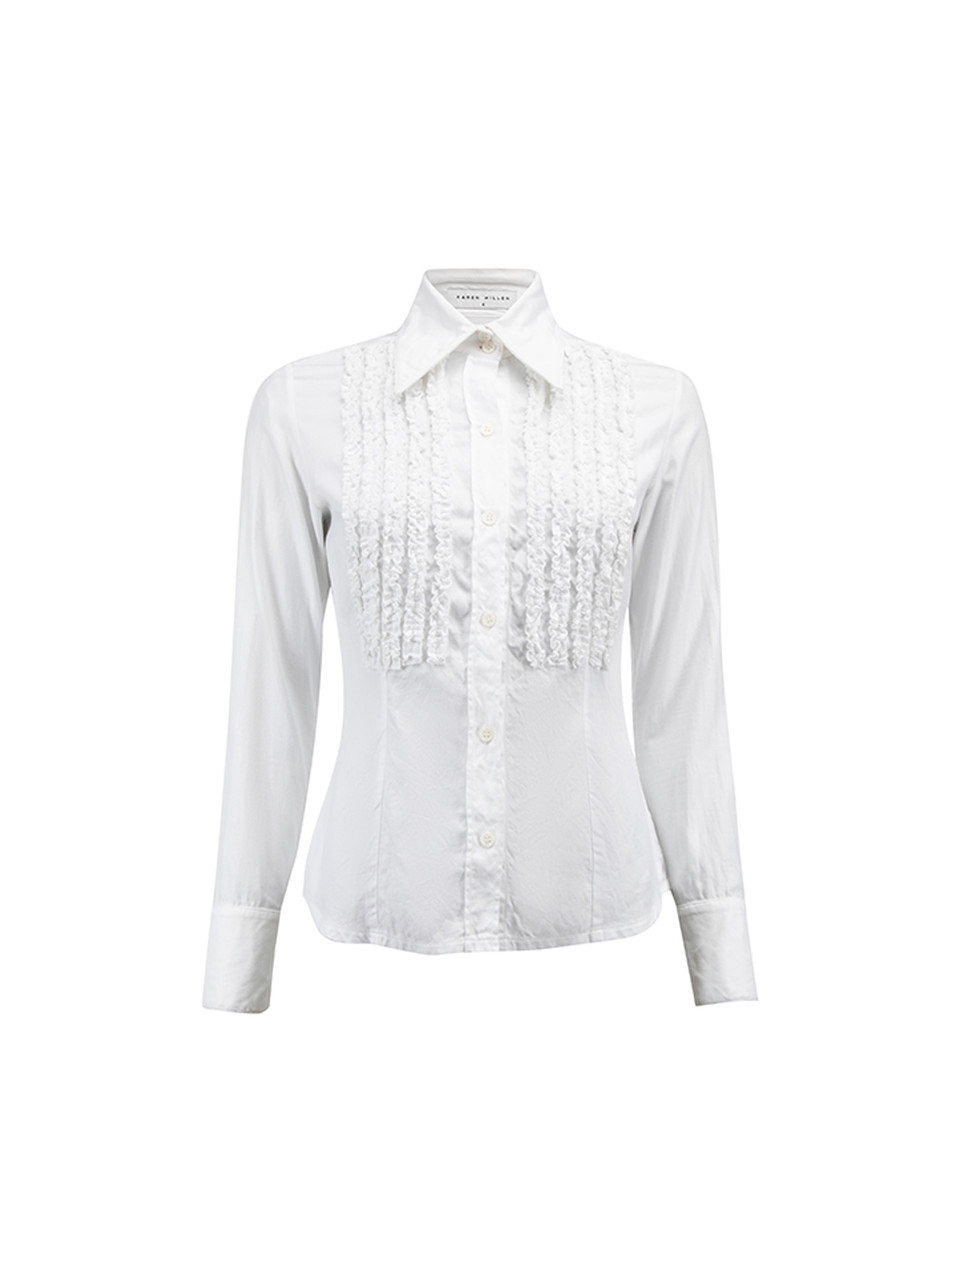 Karen Millen White Cotton Ruffled Accent Shirt